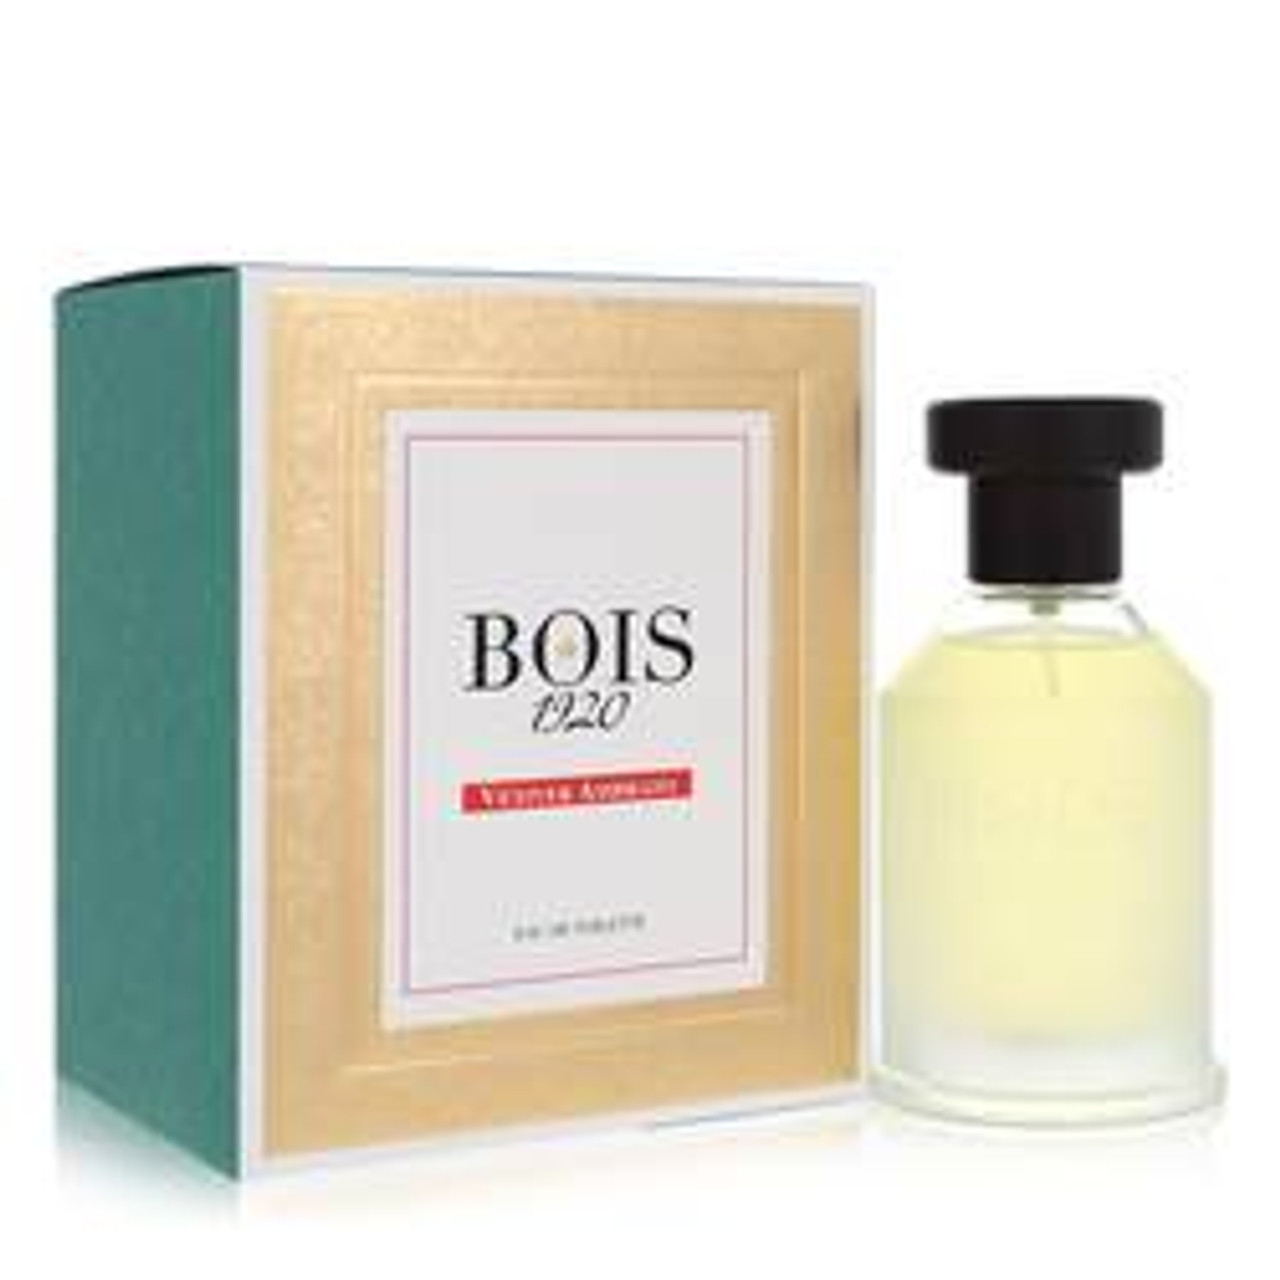 Vetiver Ambrato Perfume By Bois 1920 Eau De Toilette Spray 3.4 oz for Women - *Pre-Order